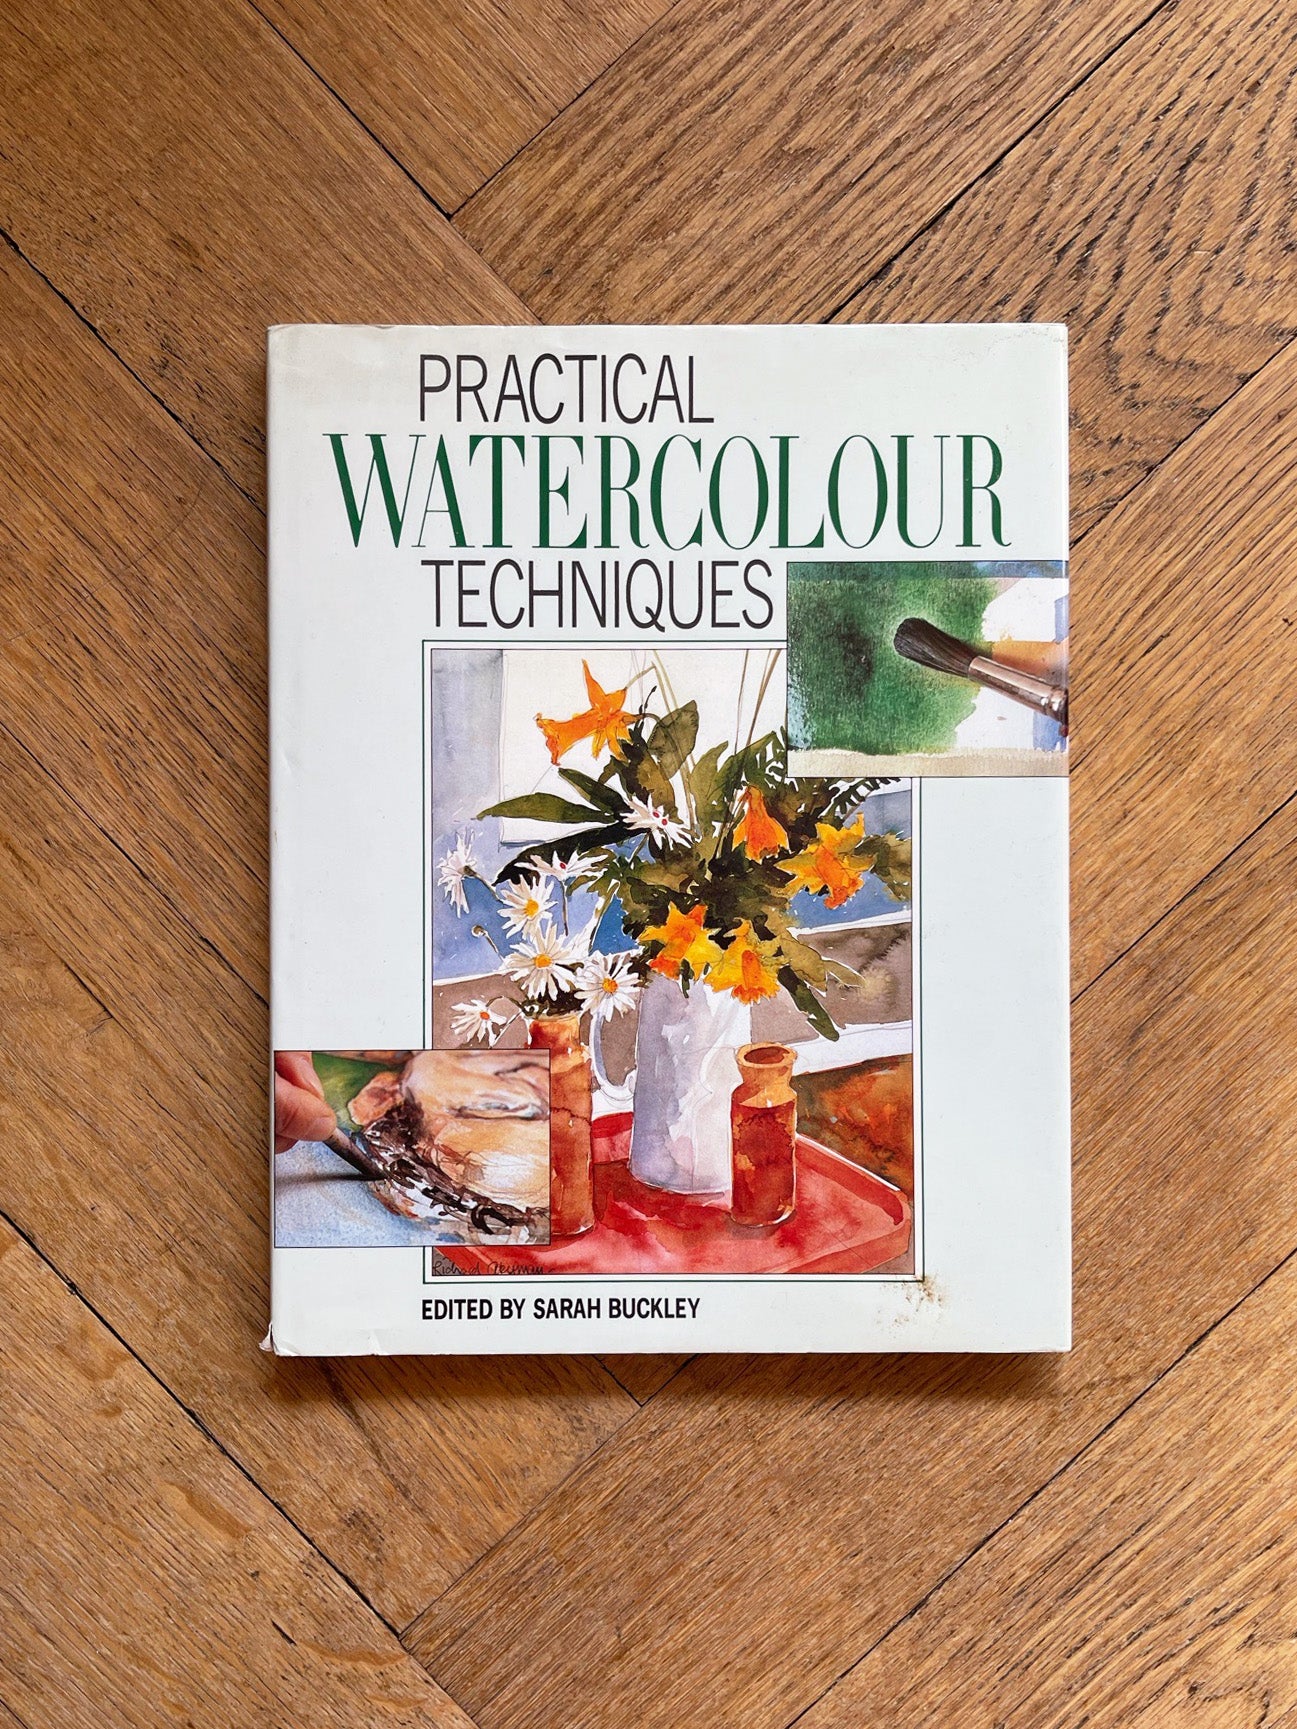 Practical Watercolour Techniques by Sarah Buckley